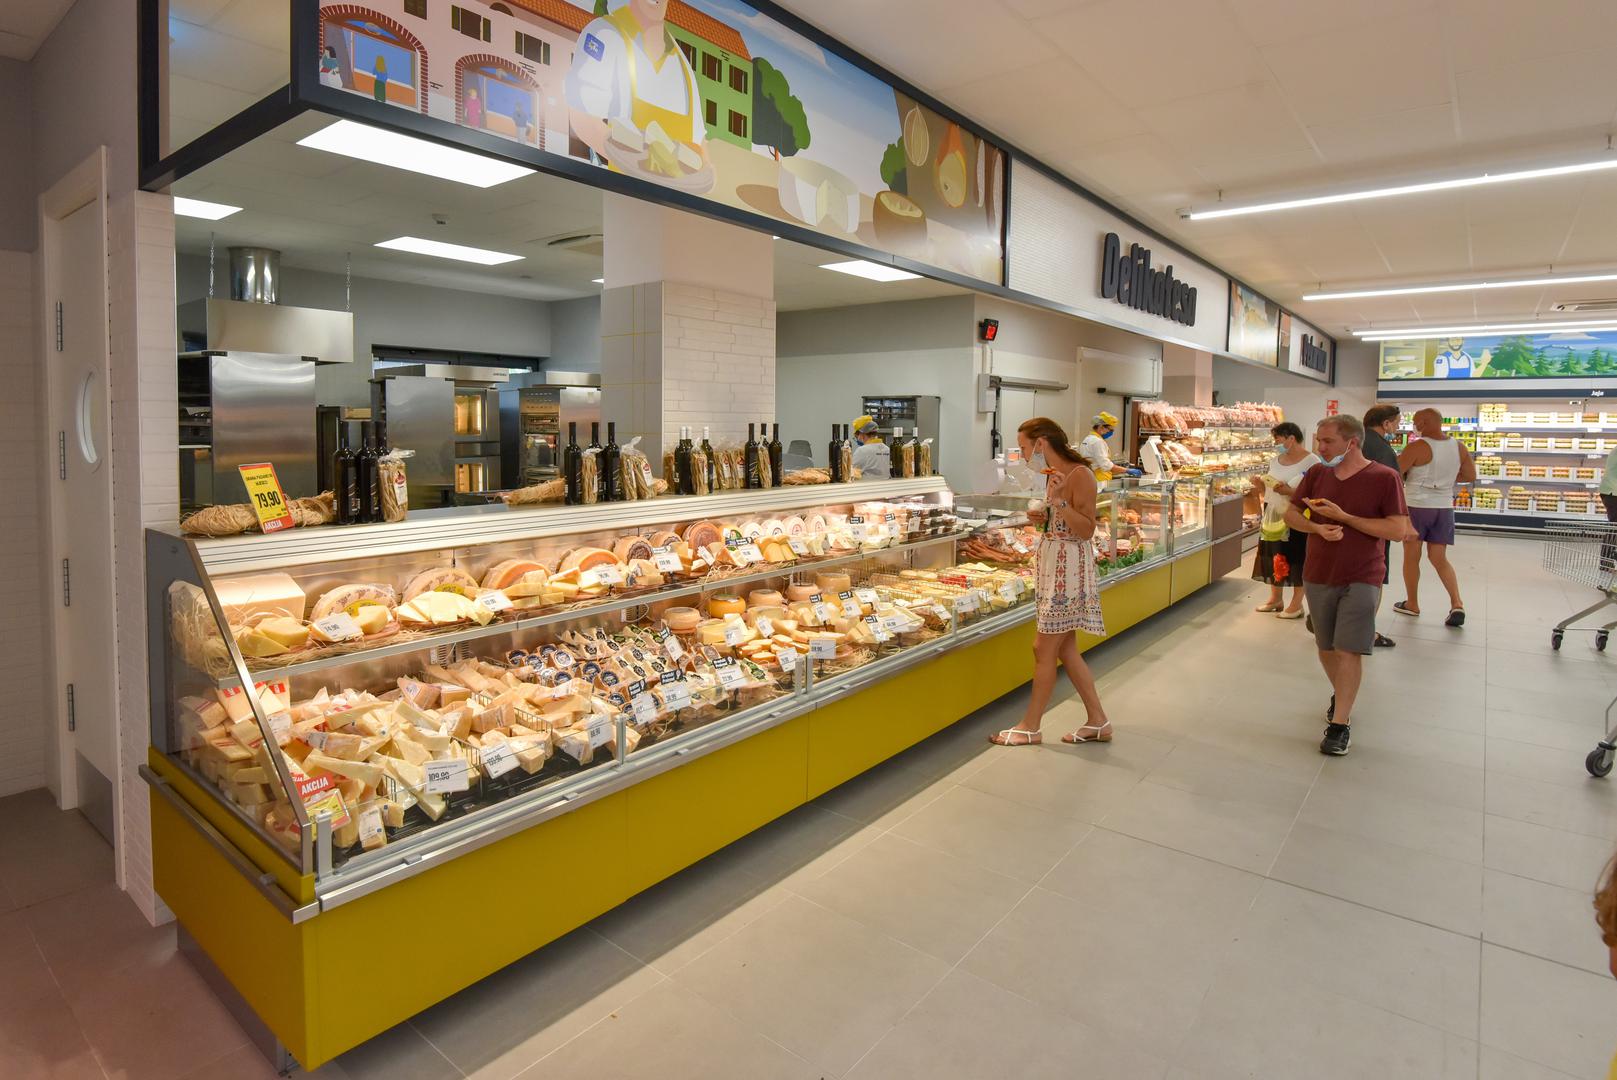 13.08.2020., Zadar - Talijanski market Eurospin otvorio je svoja vrata zadranima na Jadranskoj magistrali.
Photo: Dino Stanin/PIXSELL